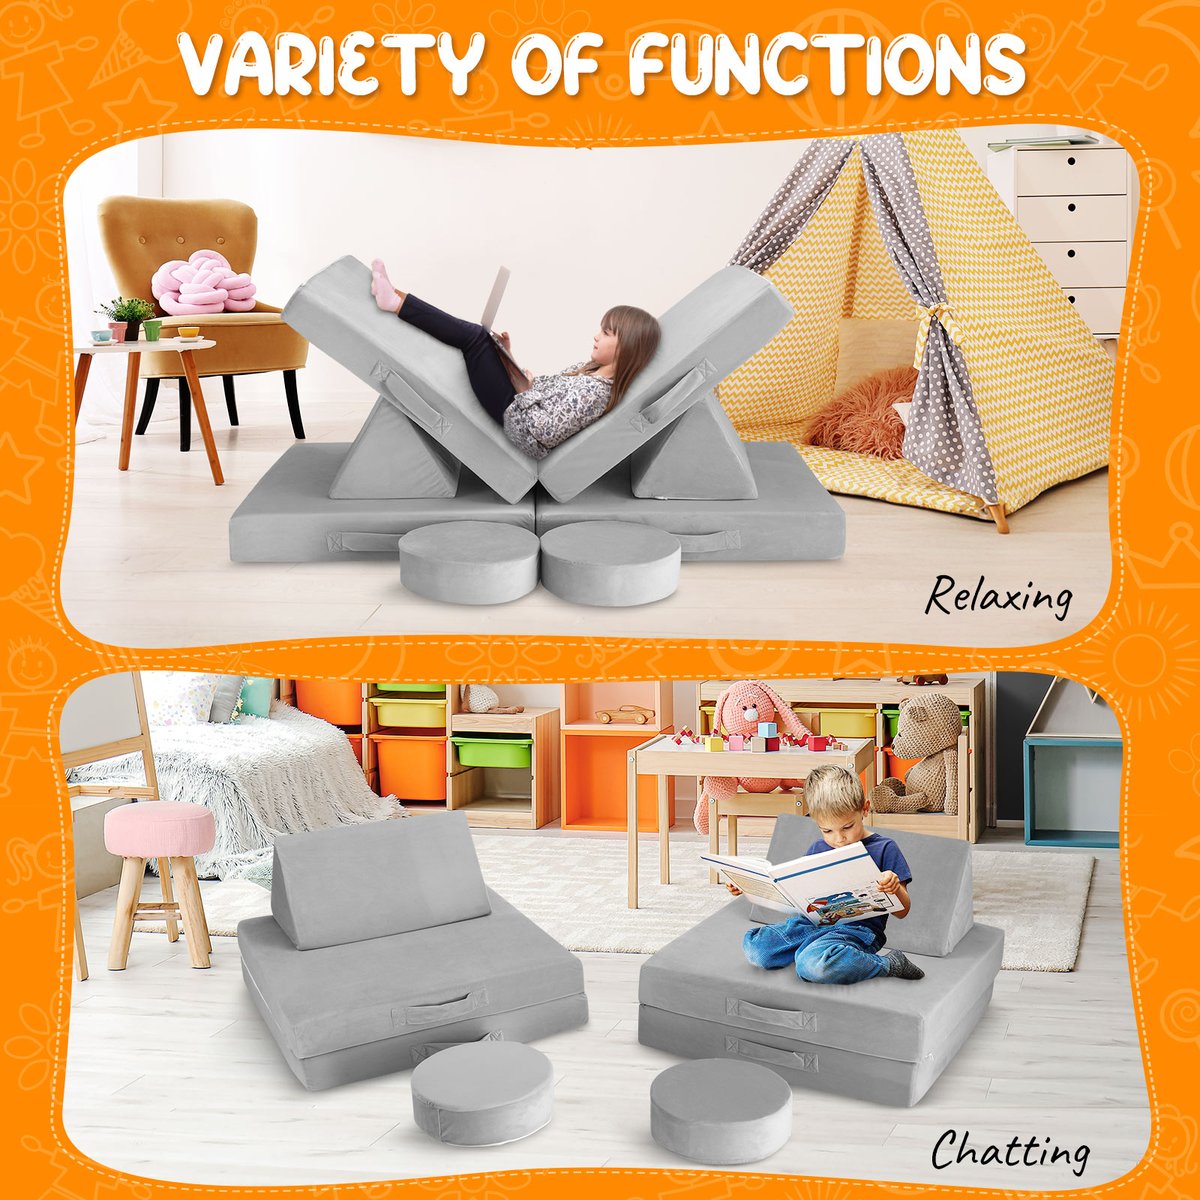 6Pcs Kids Sofa Play Couch Modular
bit.ly/44N5Vi9
#kidssofa #kidsplaytime #lounge #chair #playset #birthdaygift #room